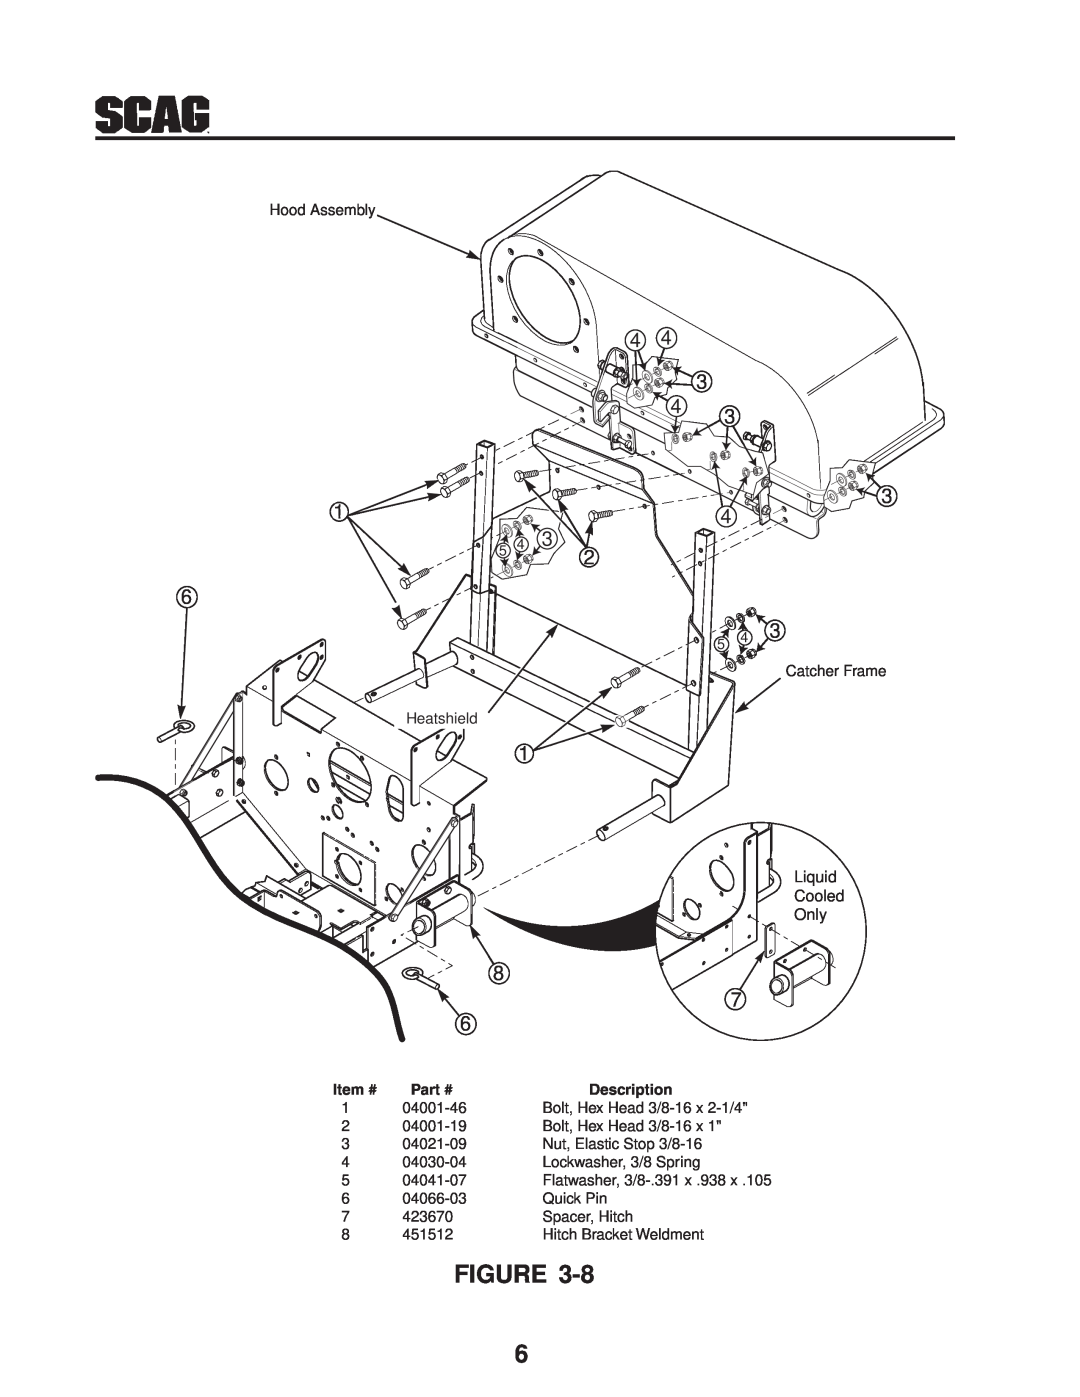 Scag Power Equipment GC-STT-V operating instructions Liquid Cooled Only, Description 